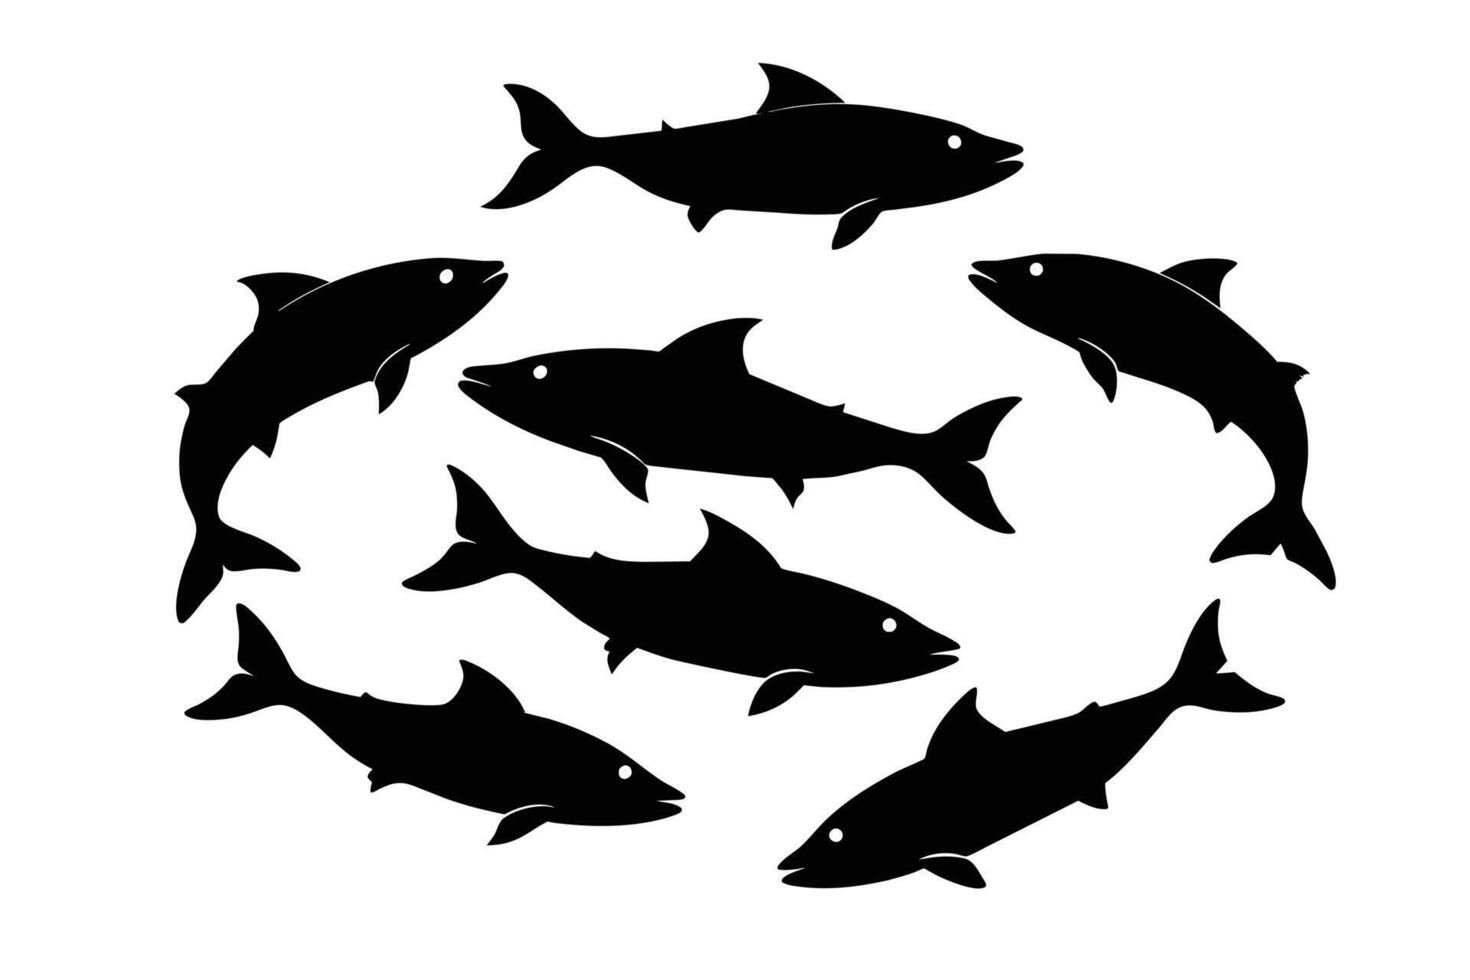 Salmon silhouette bundle vector